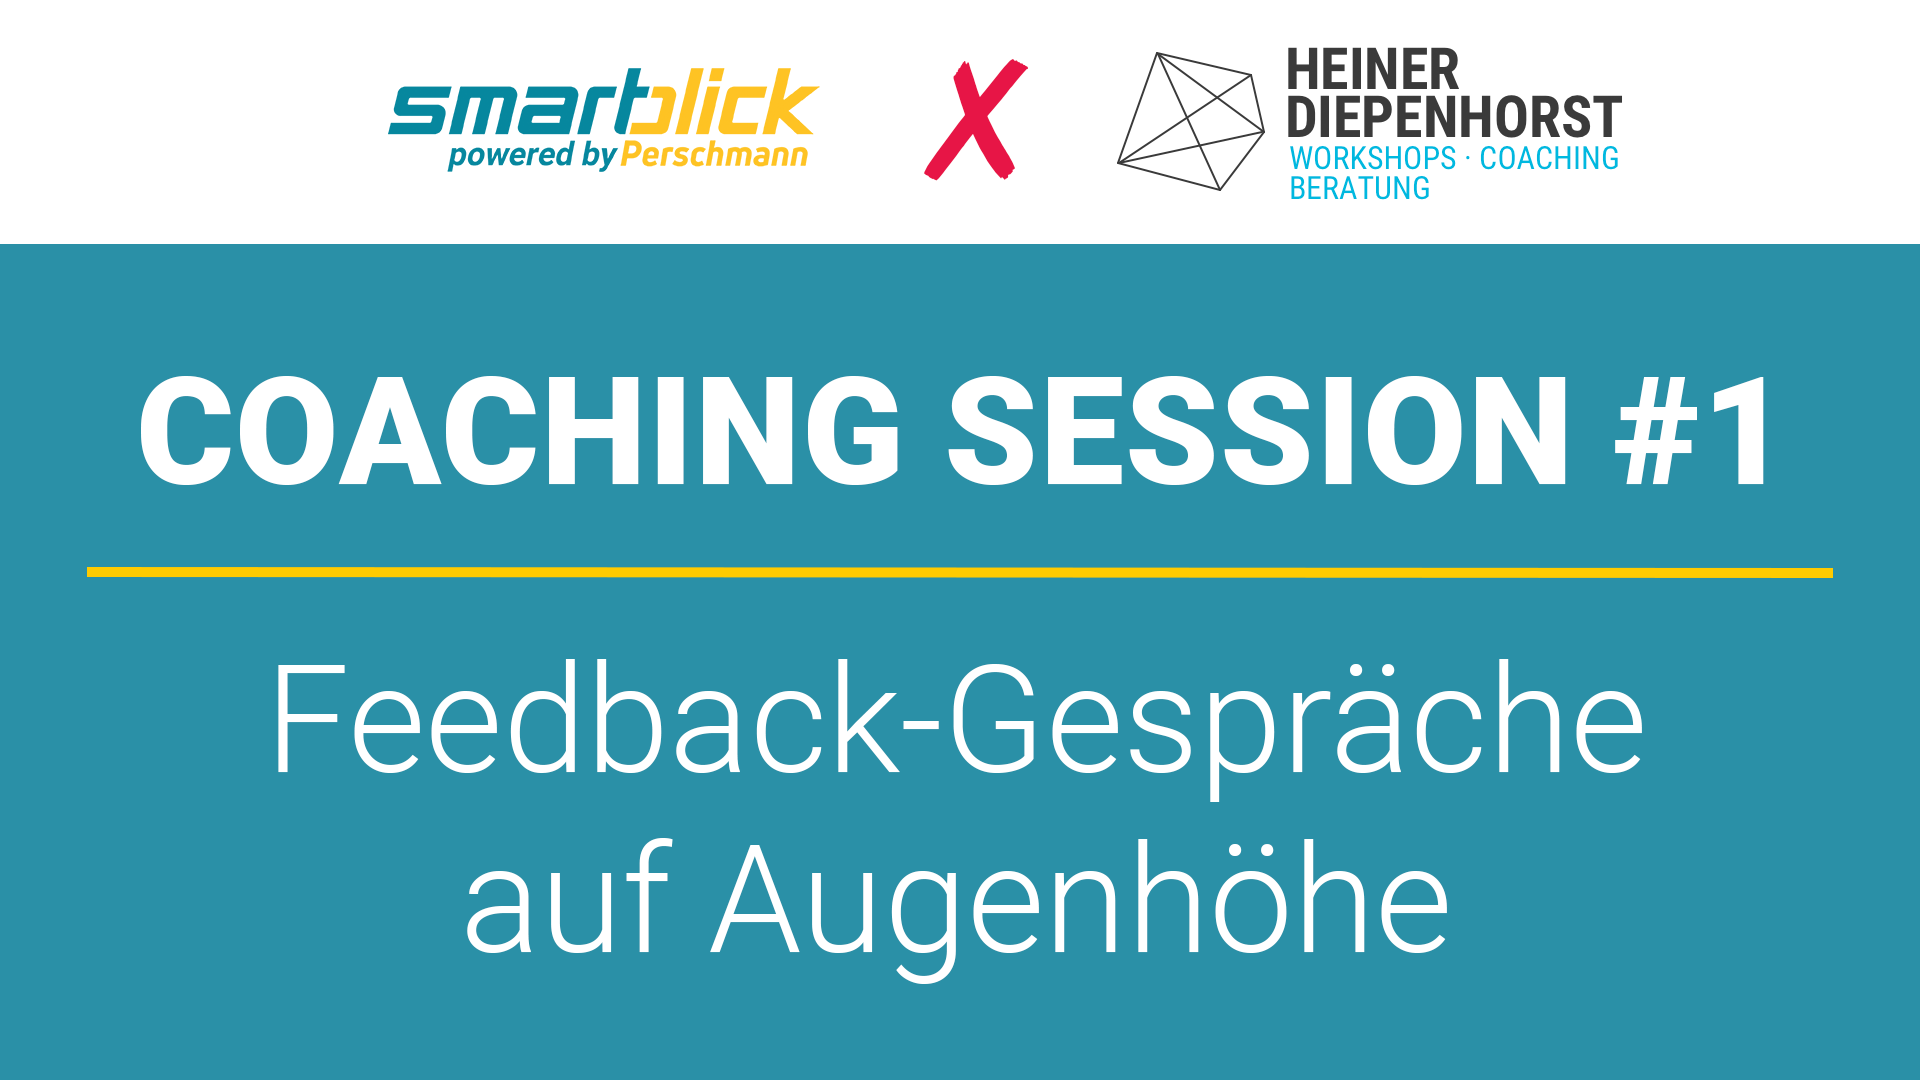 Featured image for “smartblick coacht Führungskräfte in Unternehmenskultur”